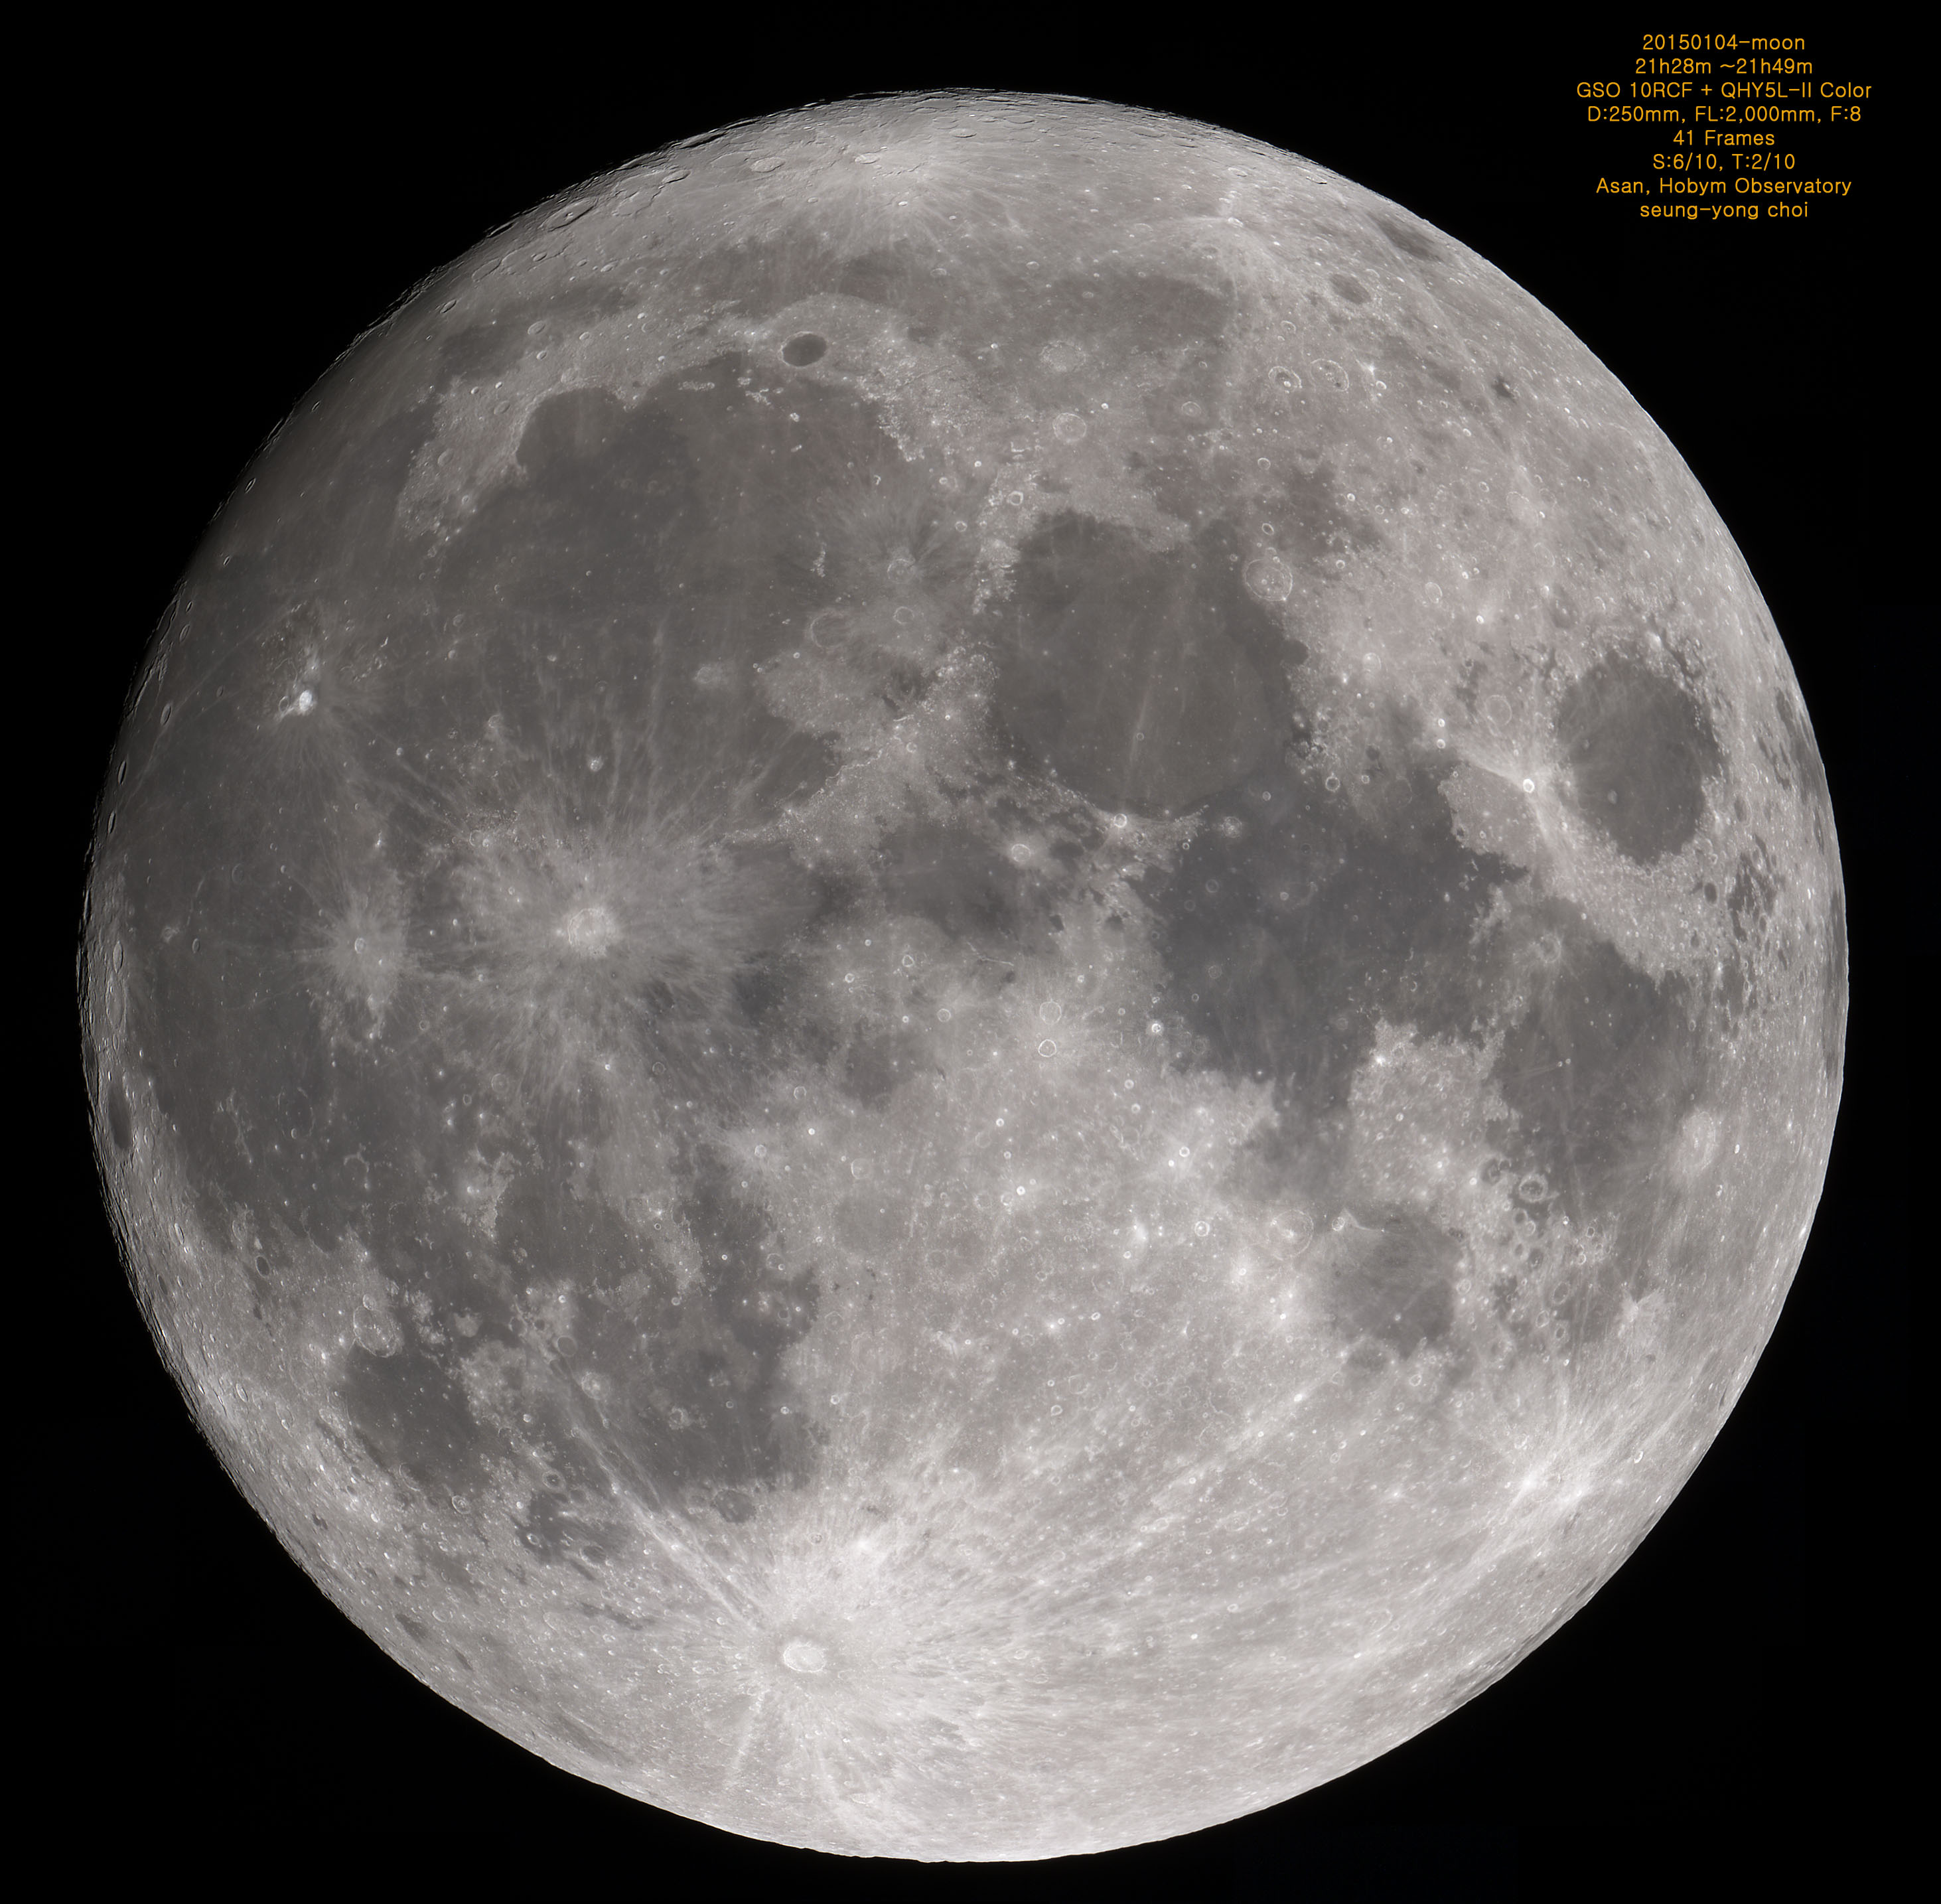 150104-moon-41p.jpg